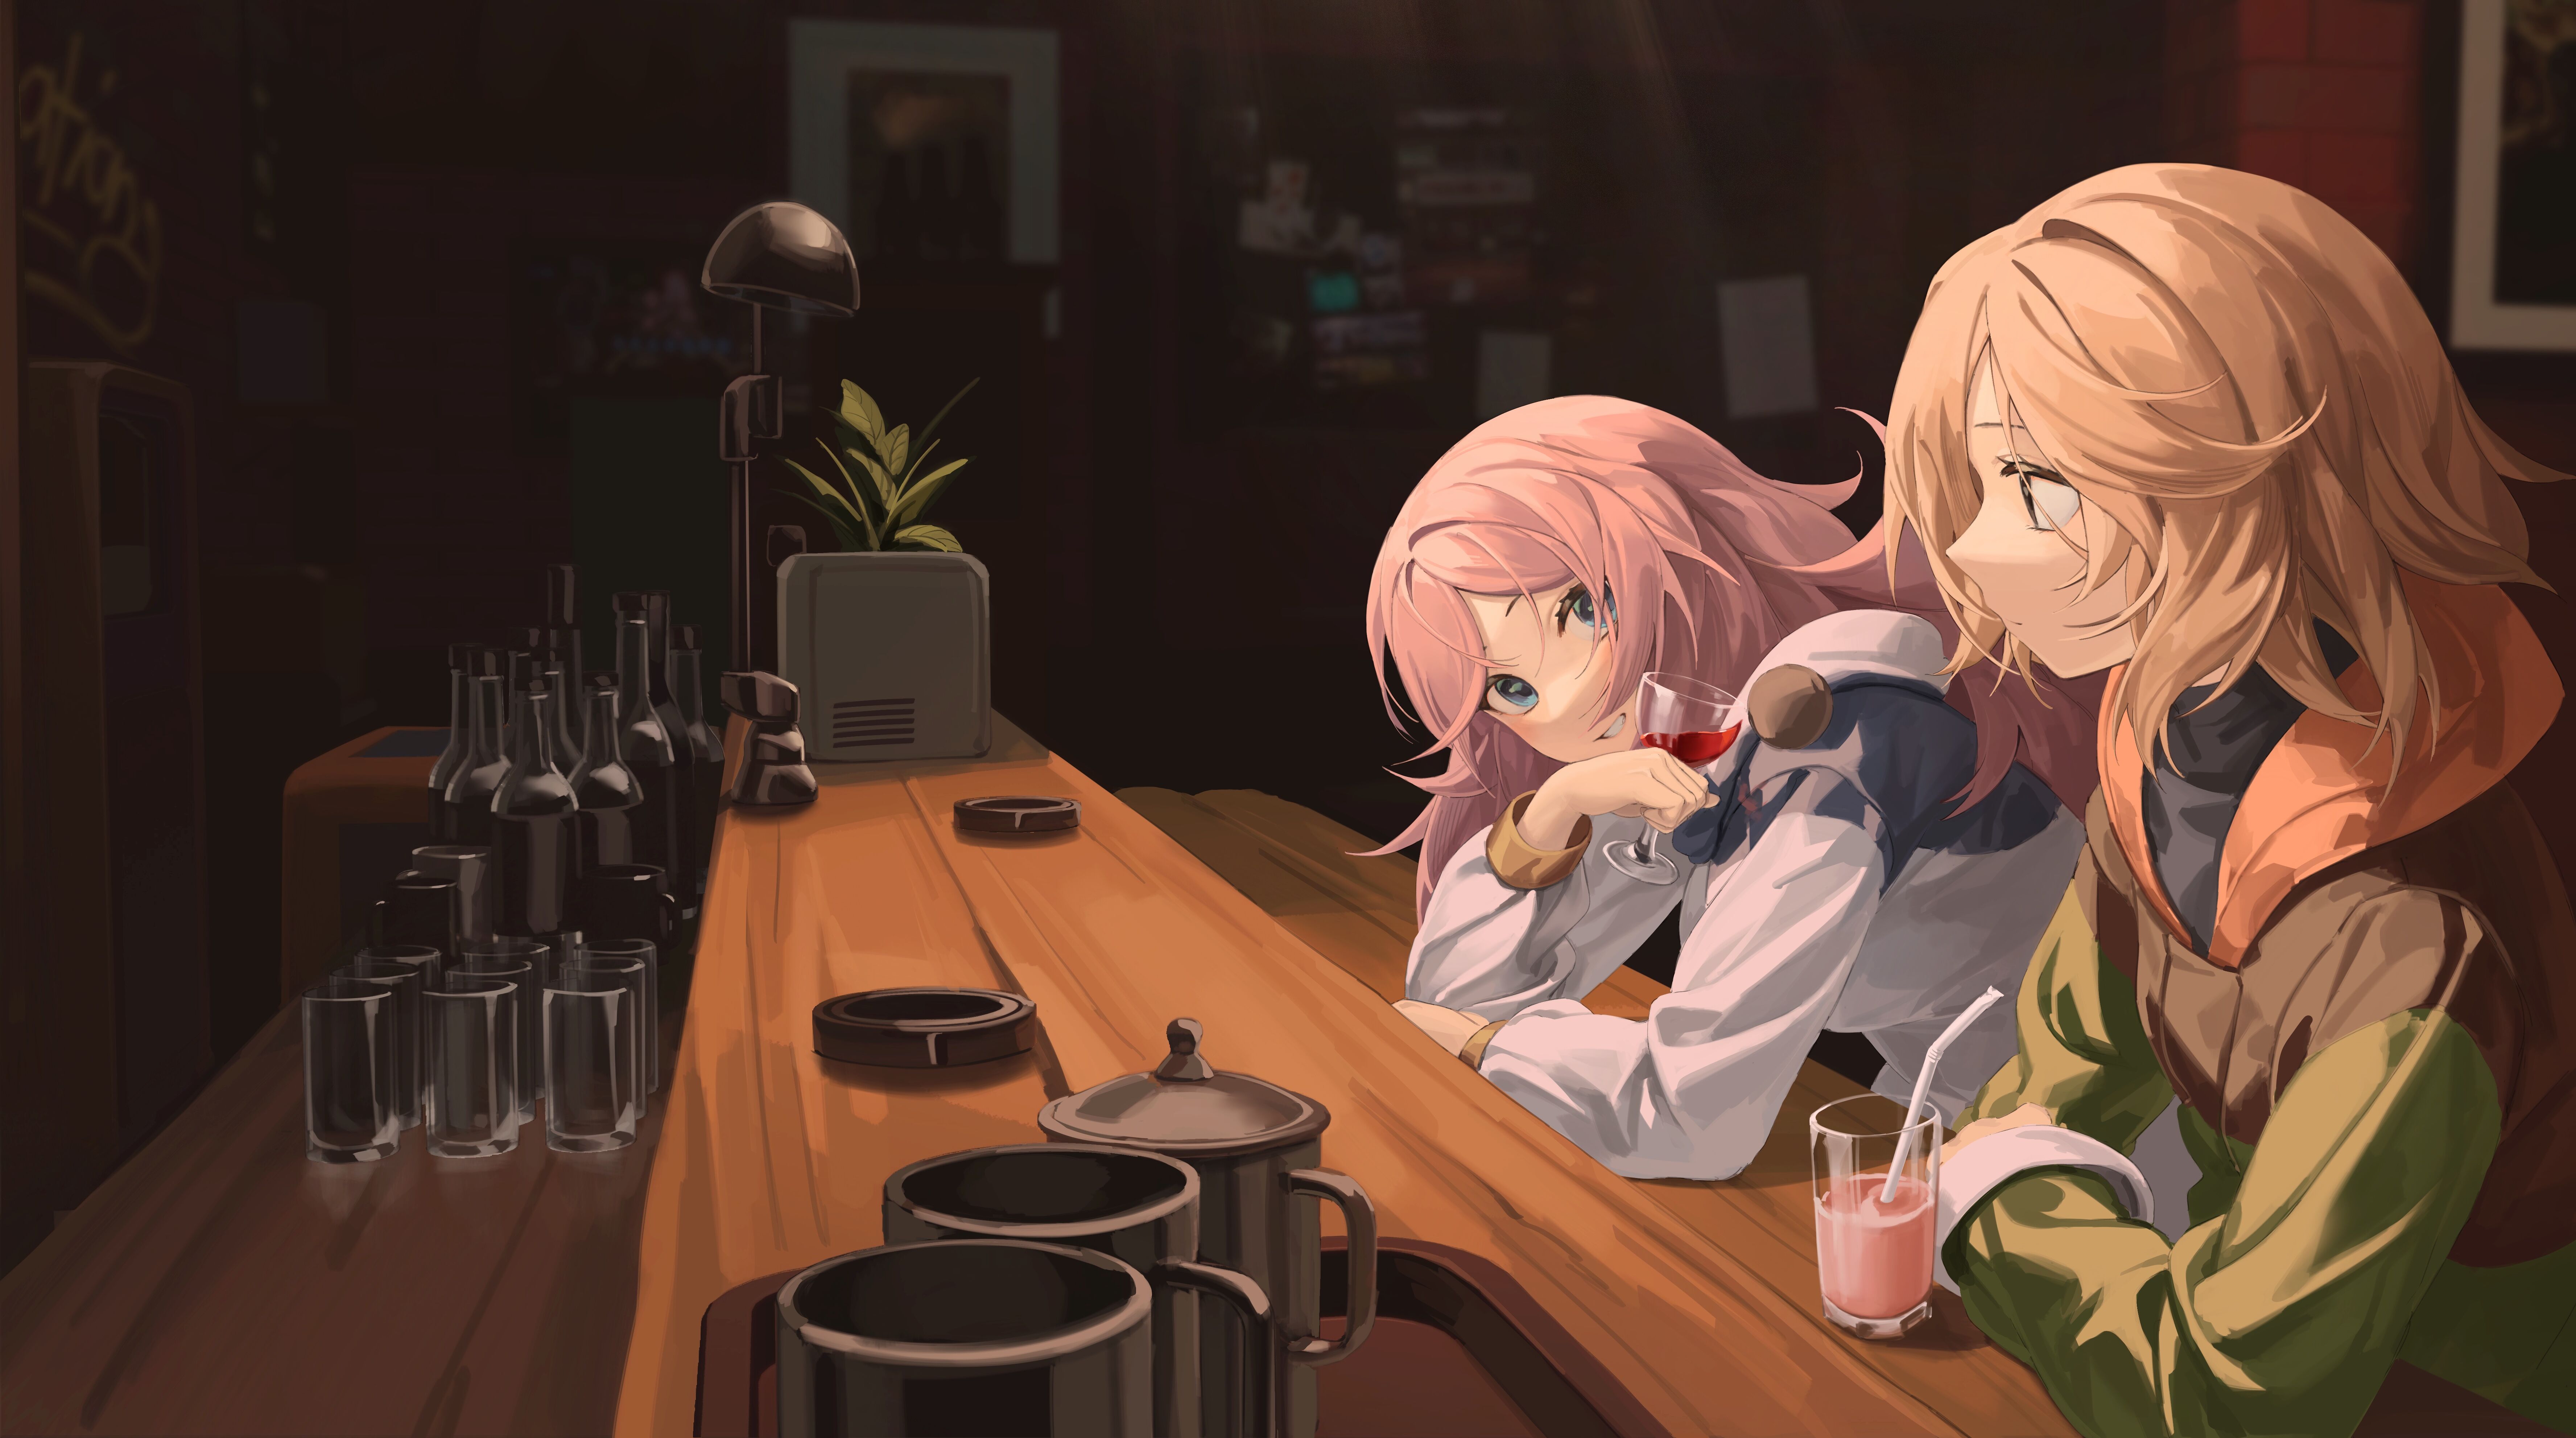 Anime 7104x3965 anime anime girls two women drinking glass blonde pink hair women indoors bar ReI Leyi artwork eastward